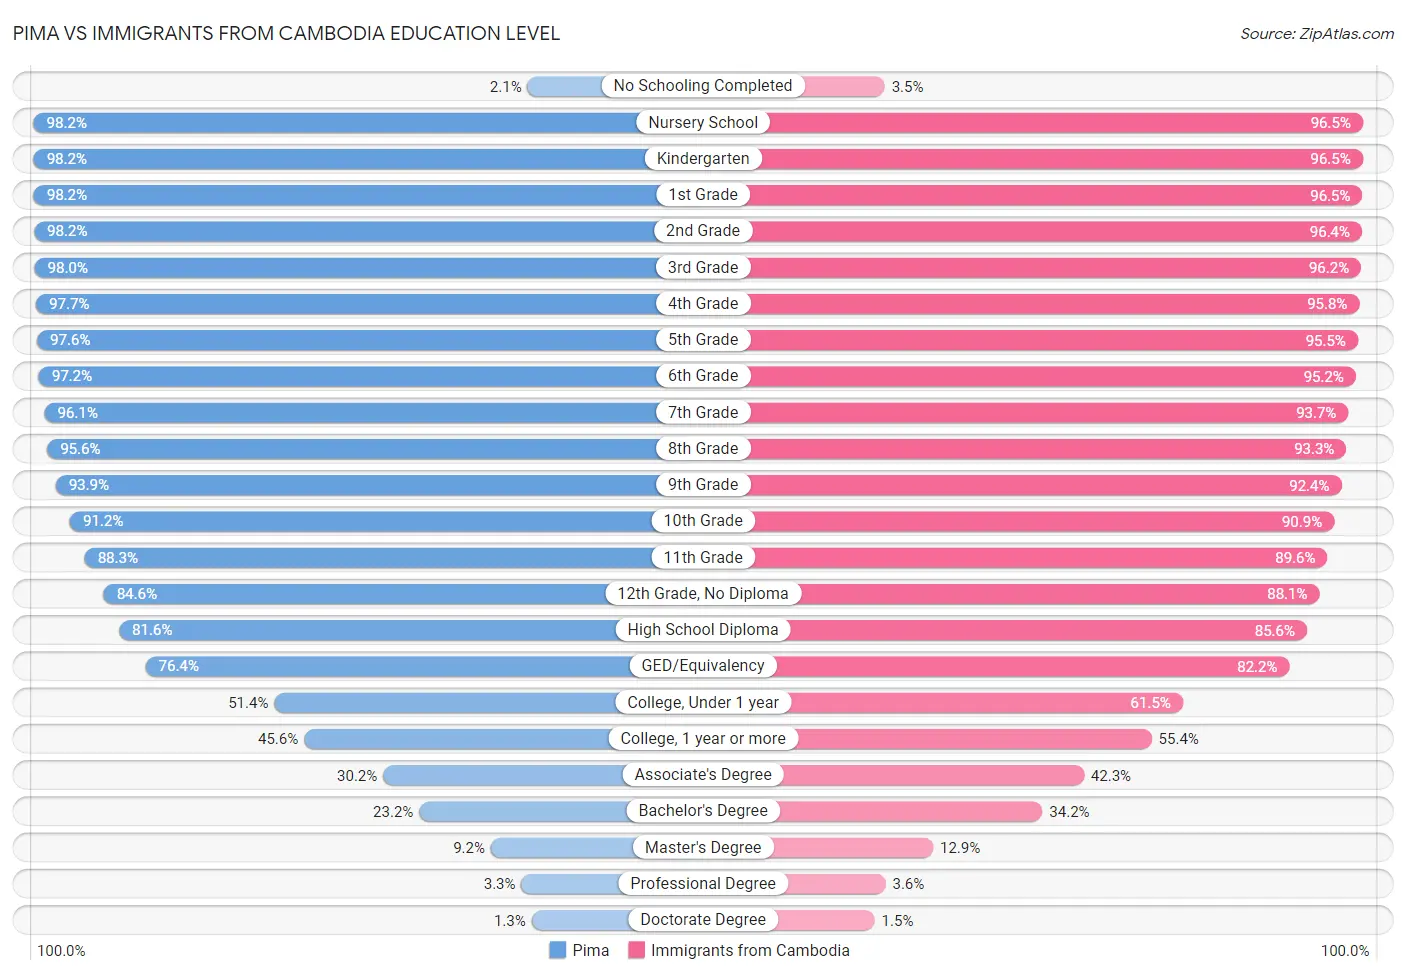 Pima vs Immigrants from Cambodia Education Level